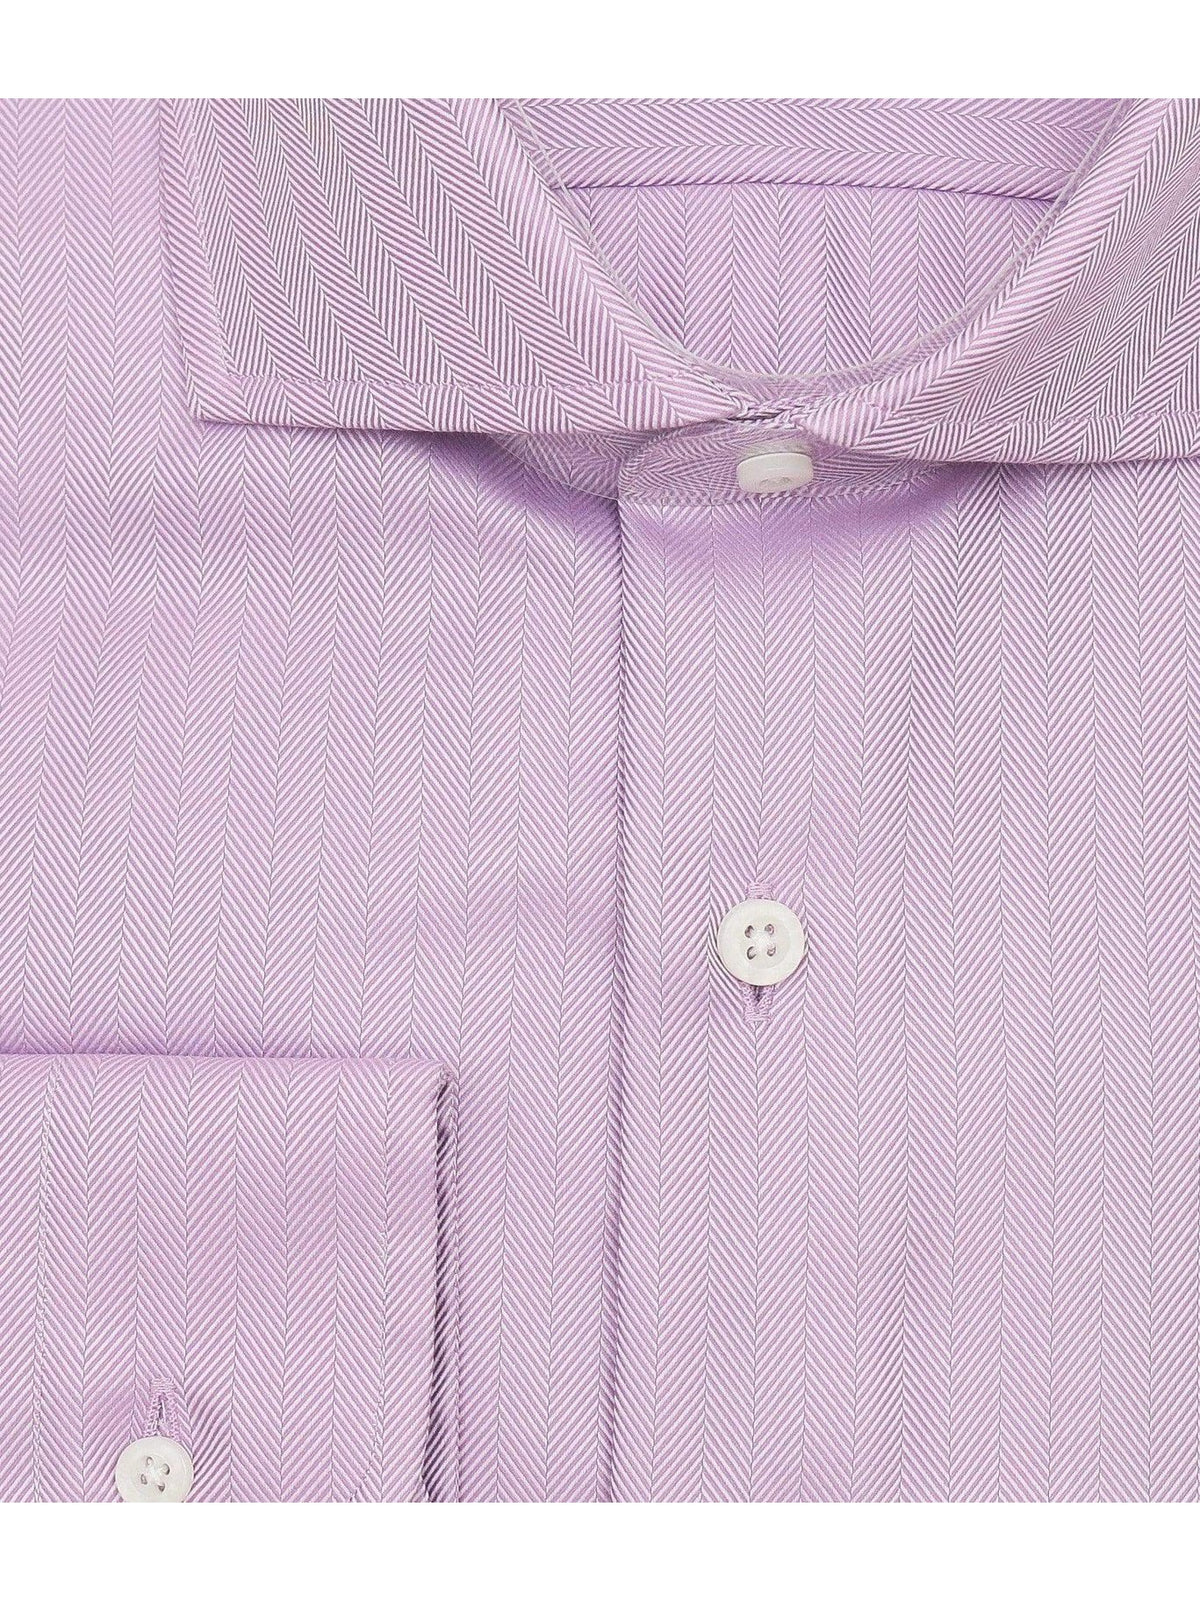 Brand P &amp; S SHIRTS Mens Cotton Solid Purple Slim Fit Spread Collar Wrinkle Free Dress Shirt